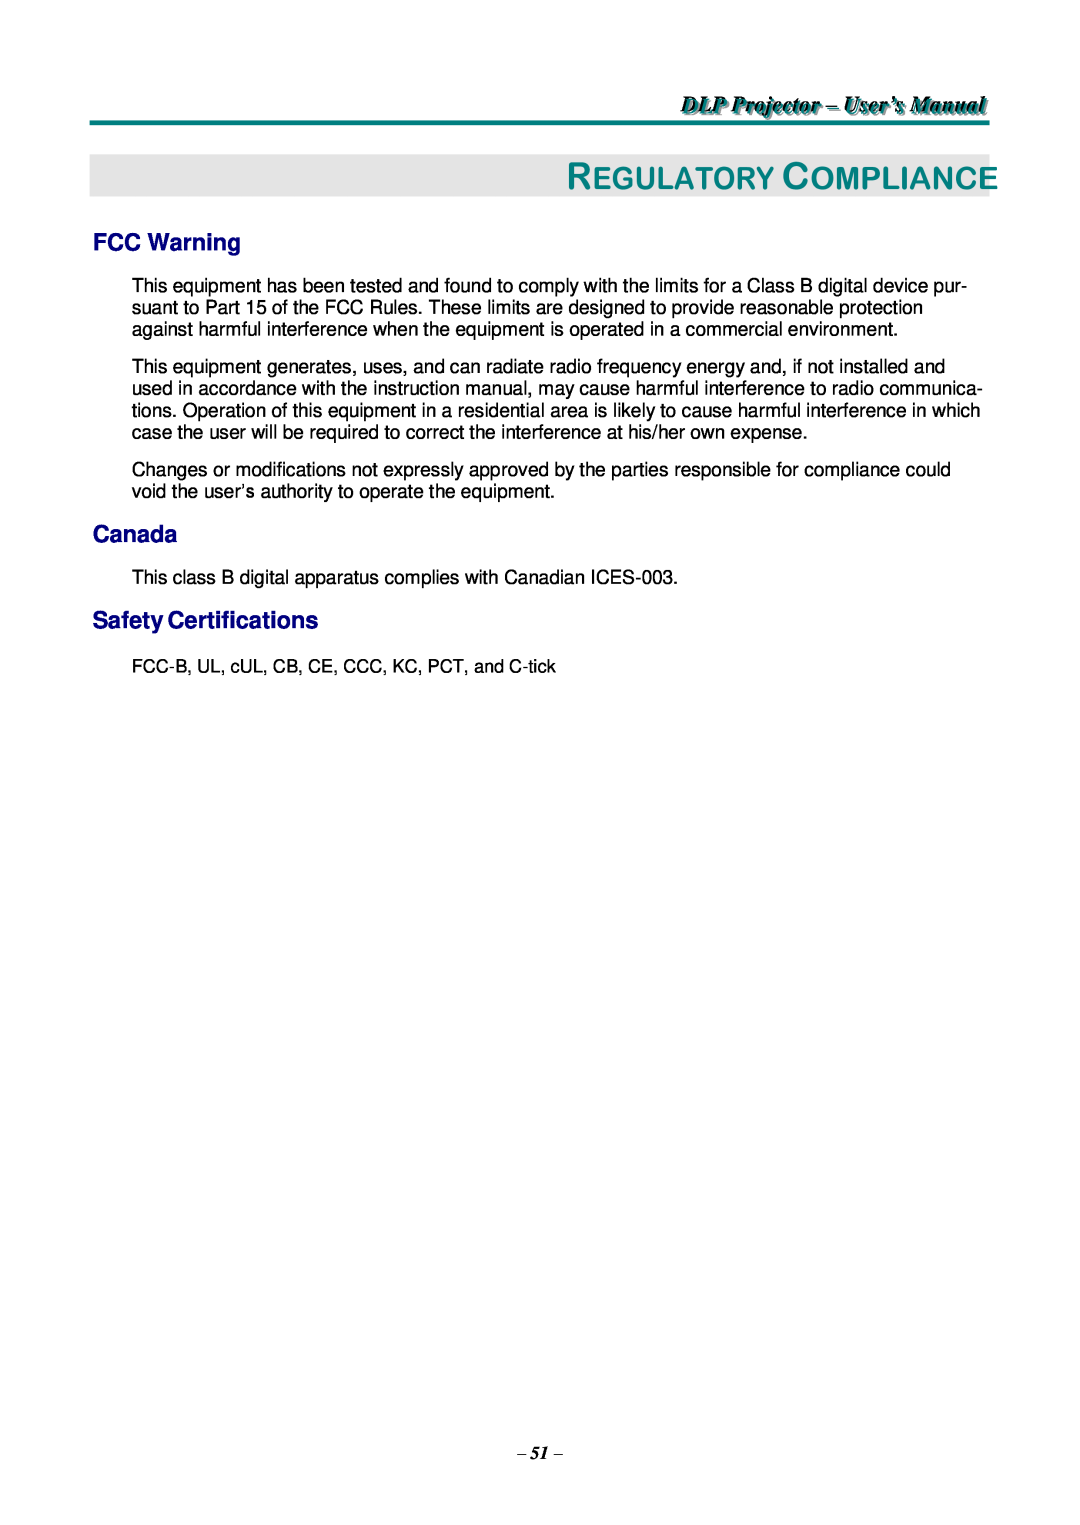 Knoll Systems HDO2200 user manual DLP Projjjectttor - User’s Manualll, Regulatory Compliance, FCC Warning, Canada 